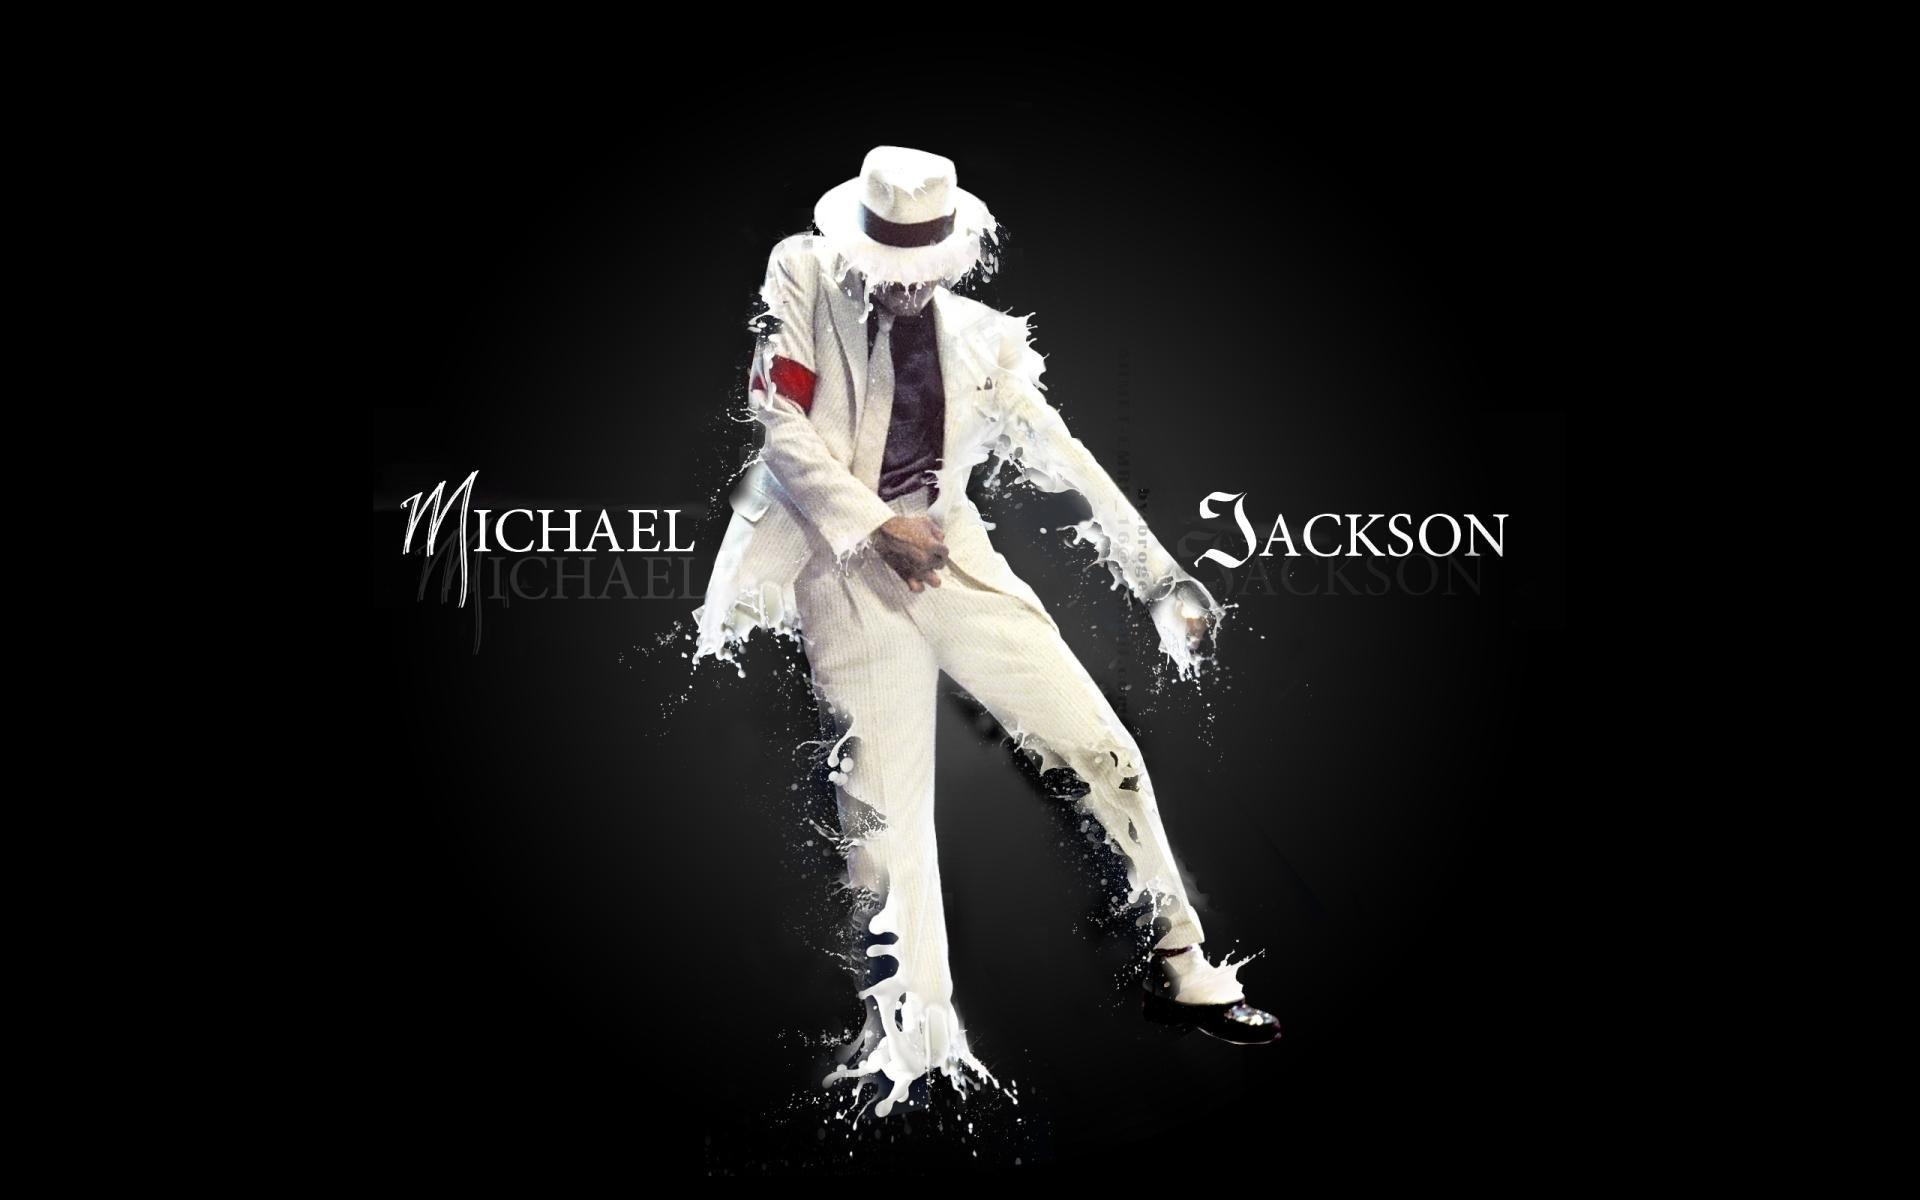 Michael Jackson Wallpaper, 39 Michael Jackson Android Compatible